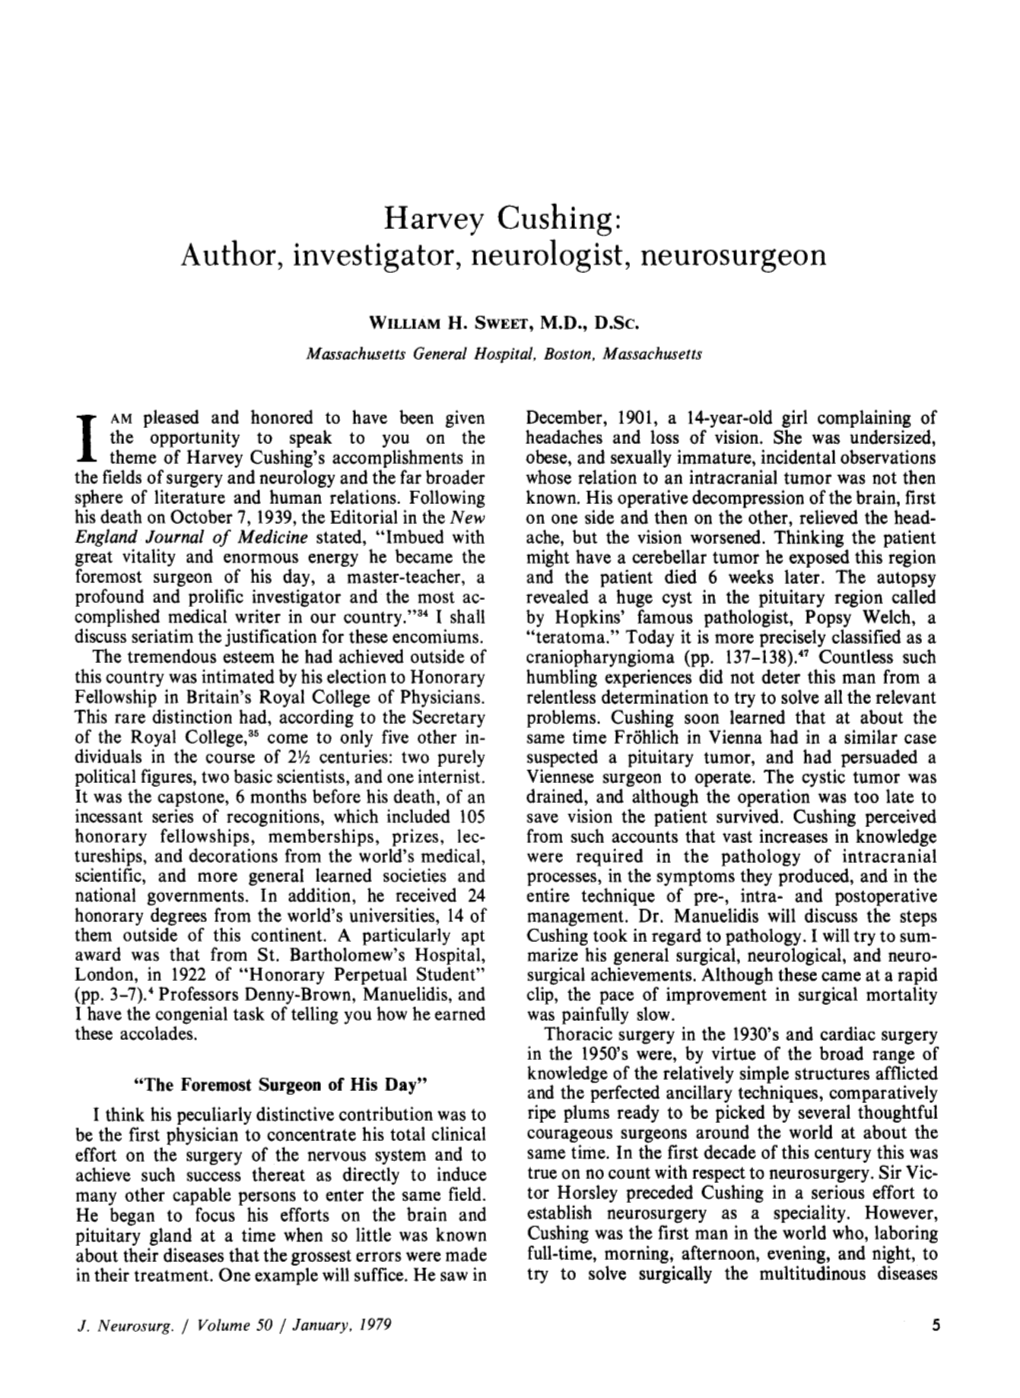 Harvey Cushing' Author, Investigator, Neurologist, Neurosurgeon